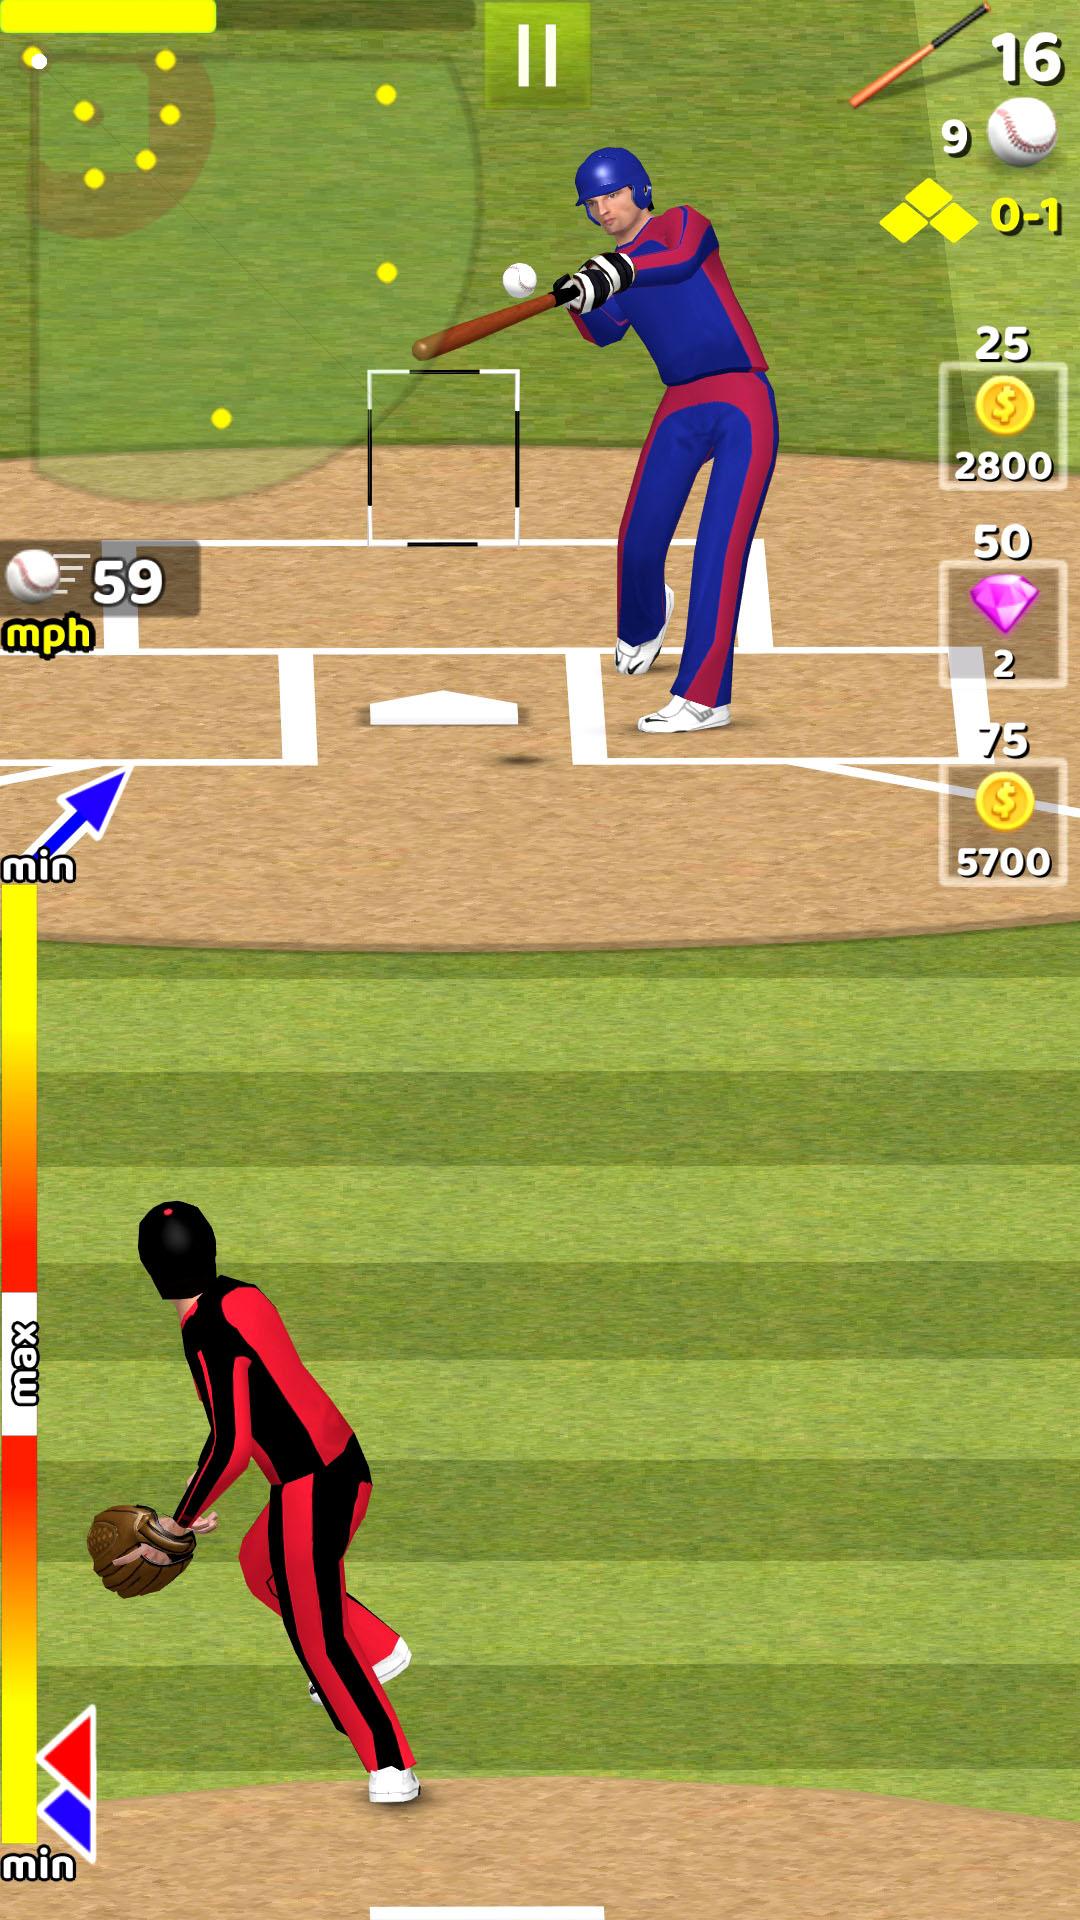 Smashing Baseball a baseball game like none other 1.0.6 Screenshot 5